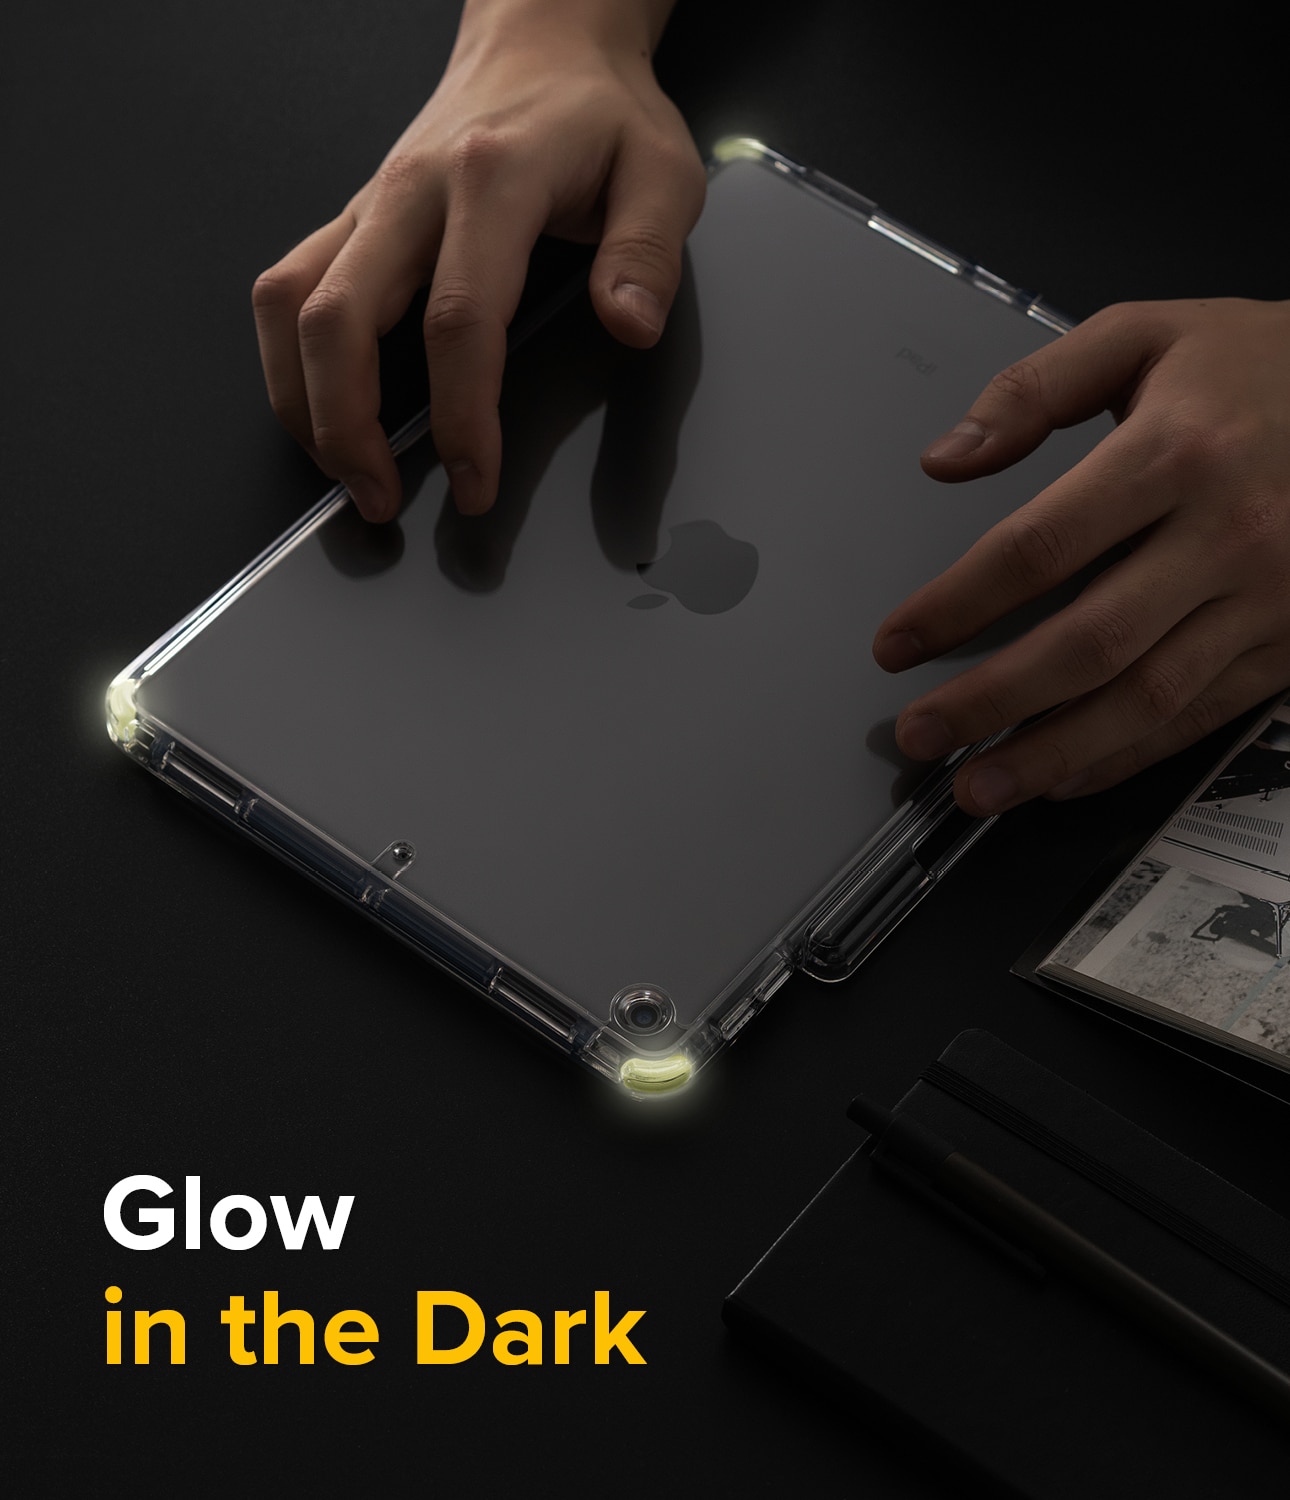 Coque Fusion Plus iPad 10.2 9th Gen (2021), White/Lime Glow